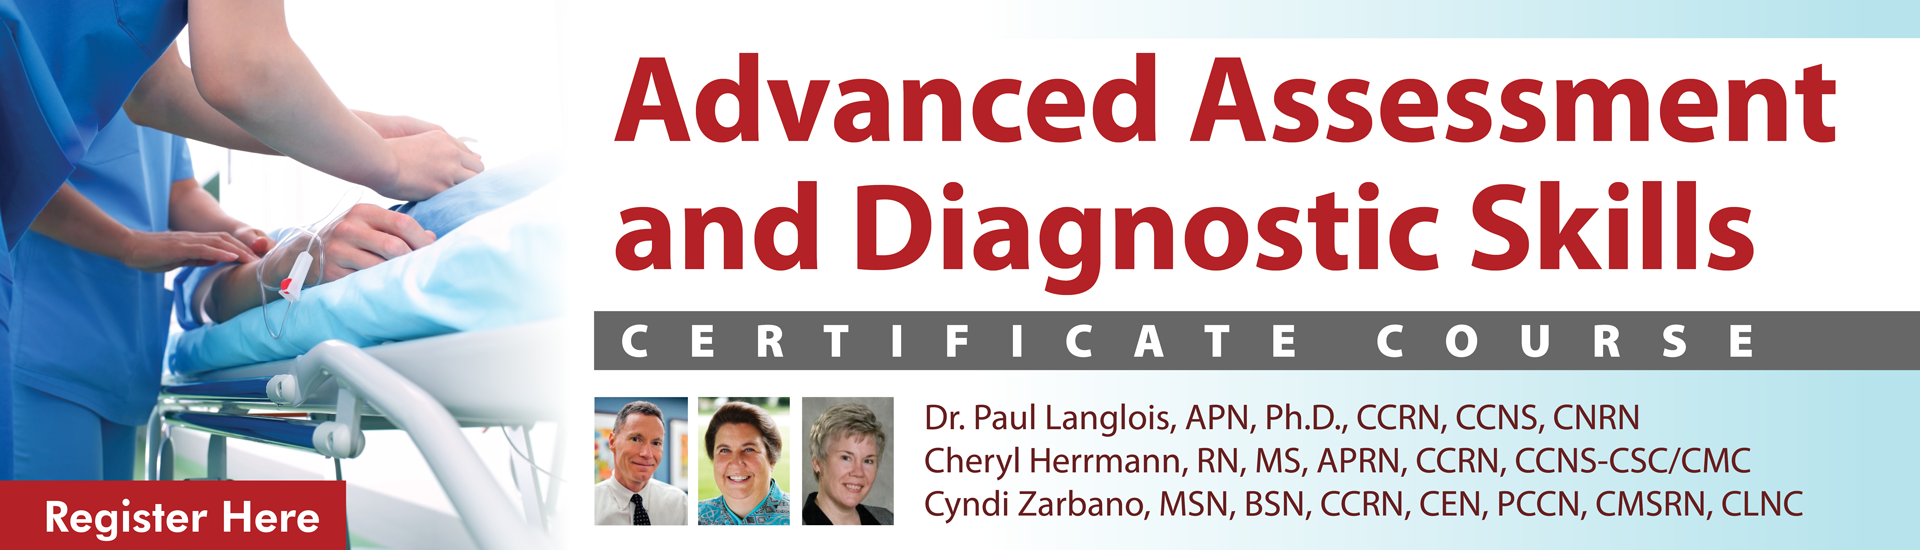 Advanced Assessment & Diagnostic Skills Certificate Course